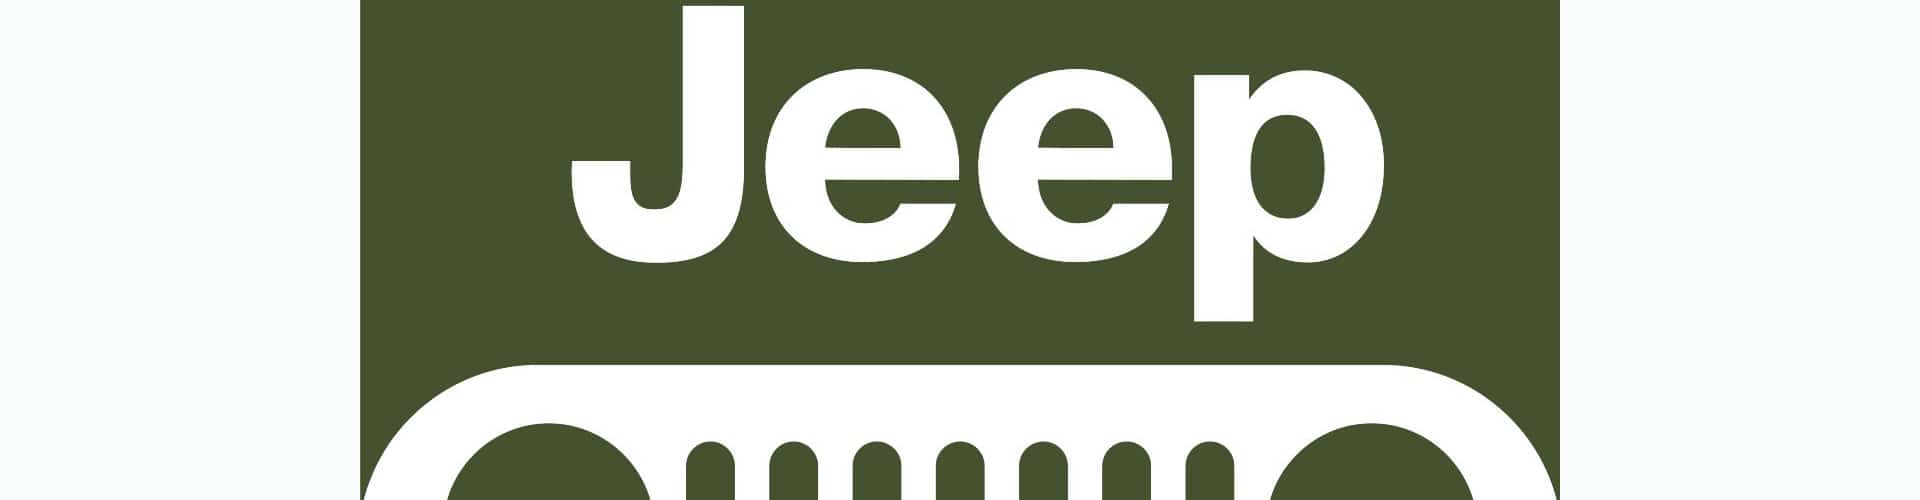 jeep 